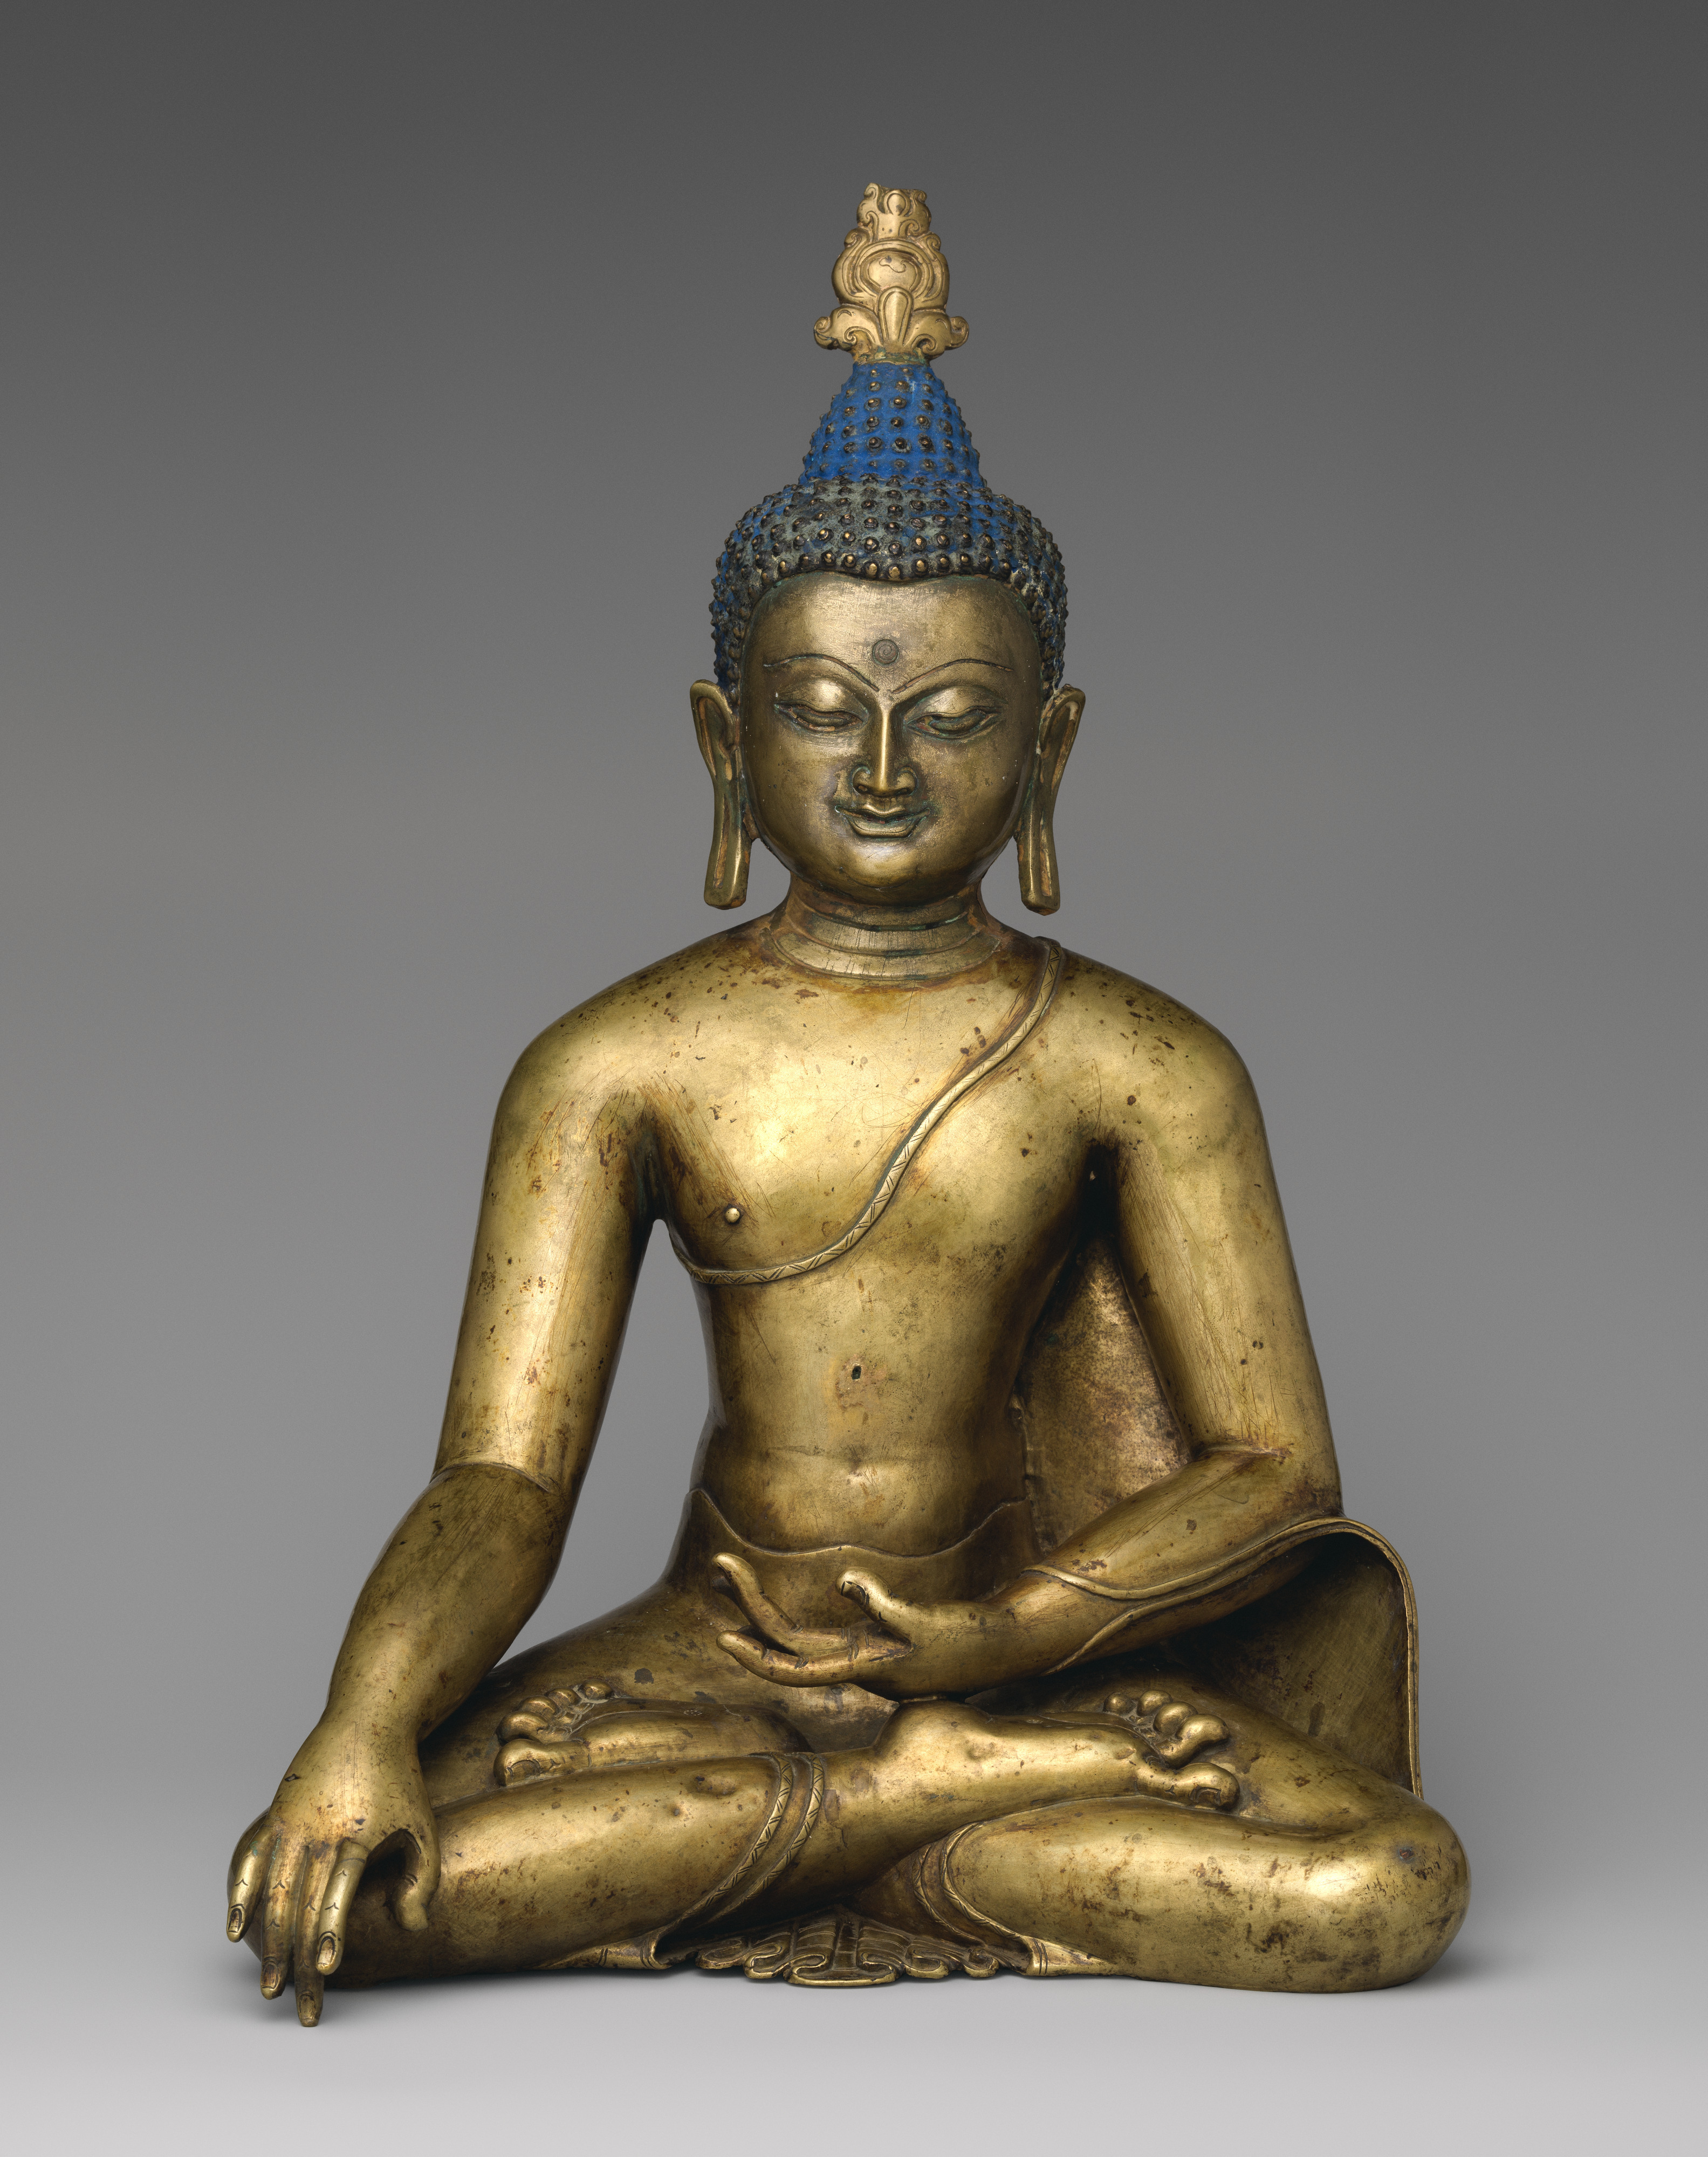 Buda Shakyamuni by Artista anónimo  - siglo XII - 39.4 x 26.5 x 21.9 cm Museo Metropolitano de Arte